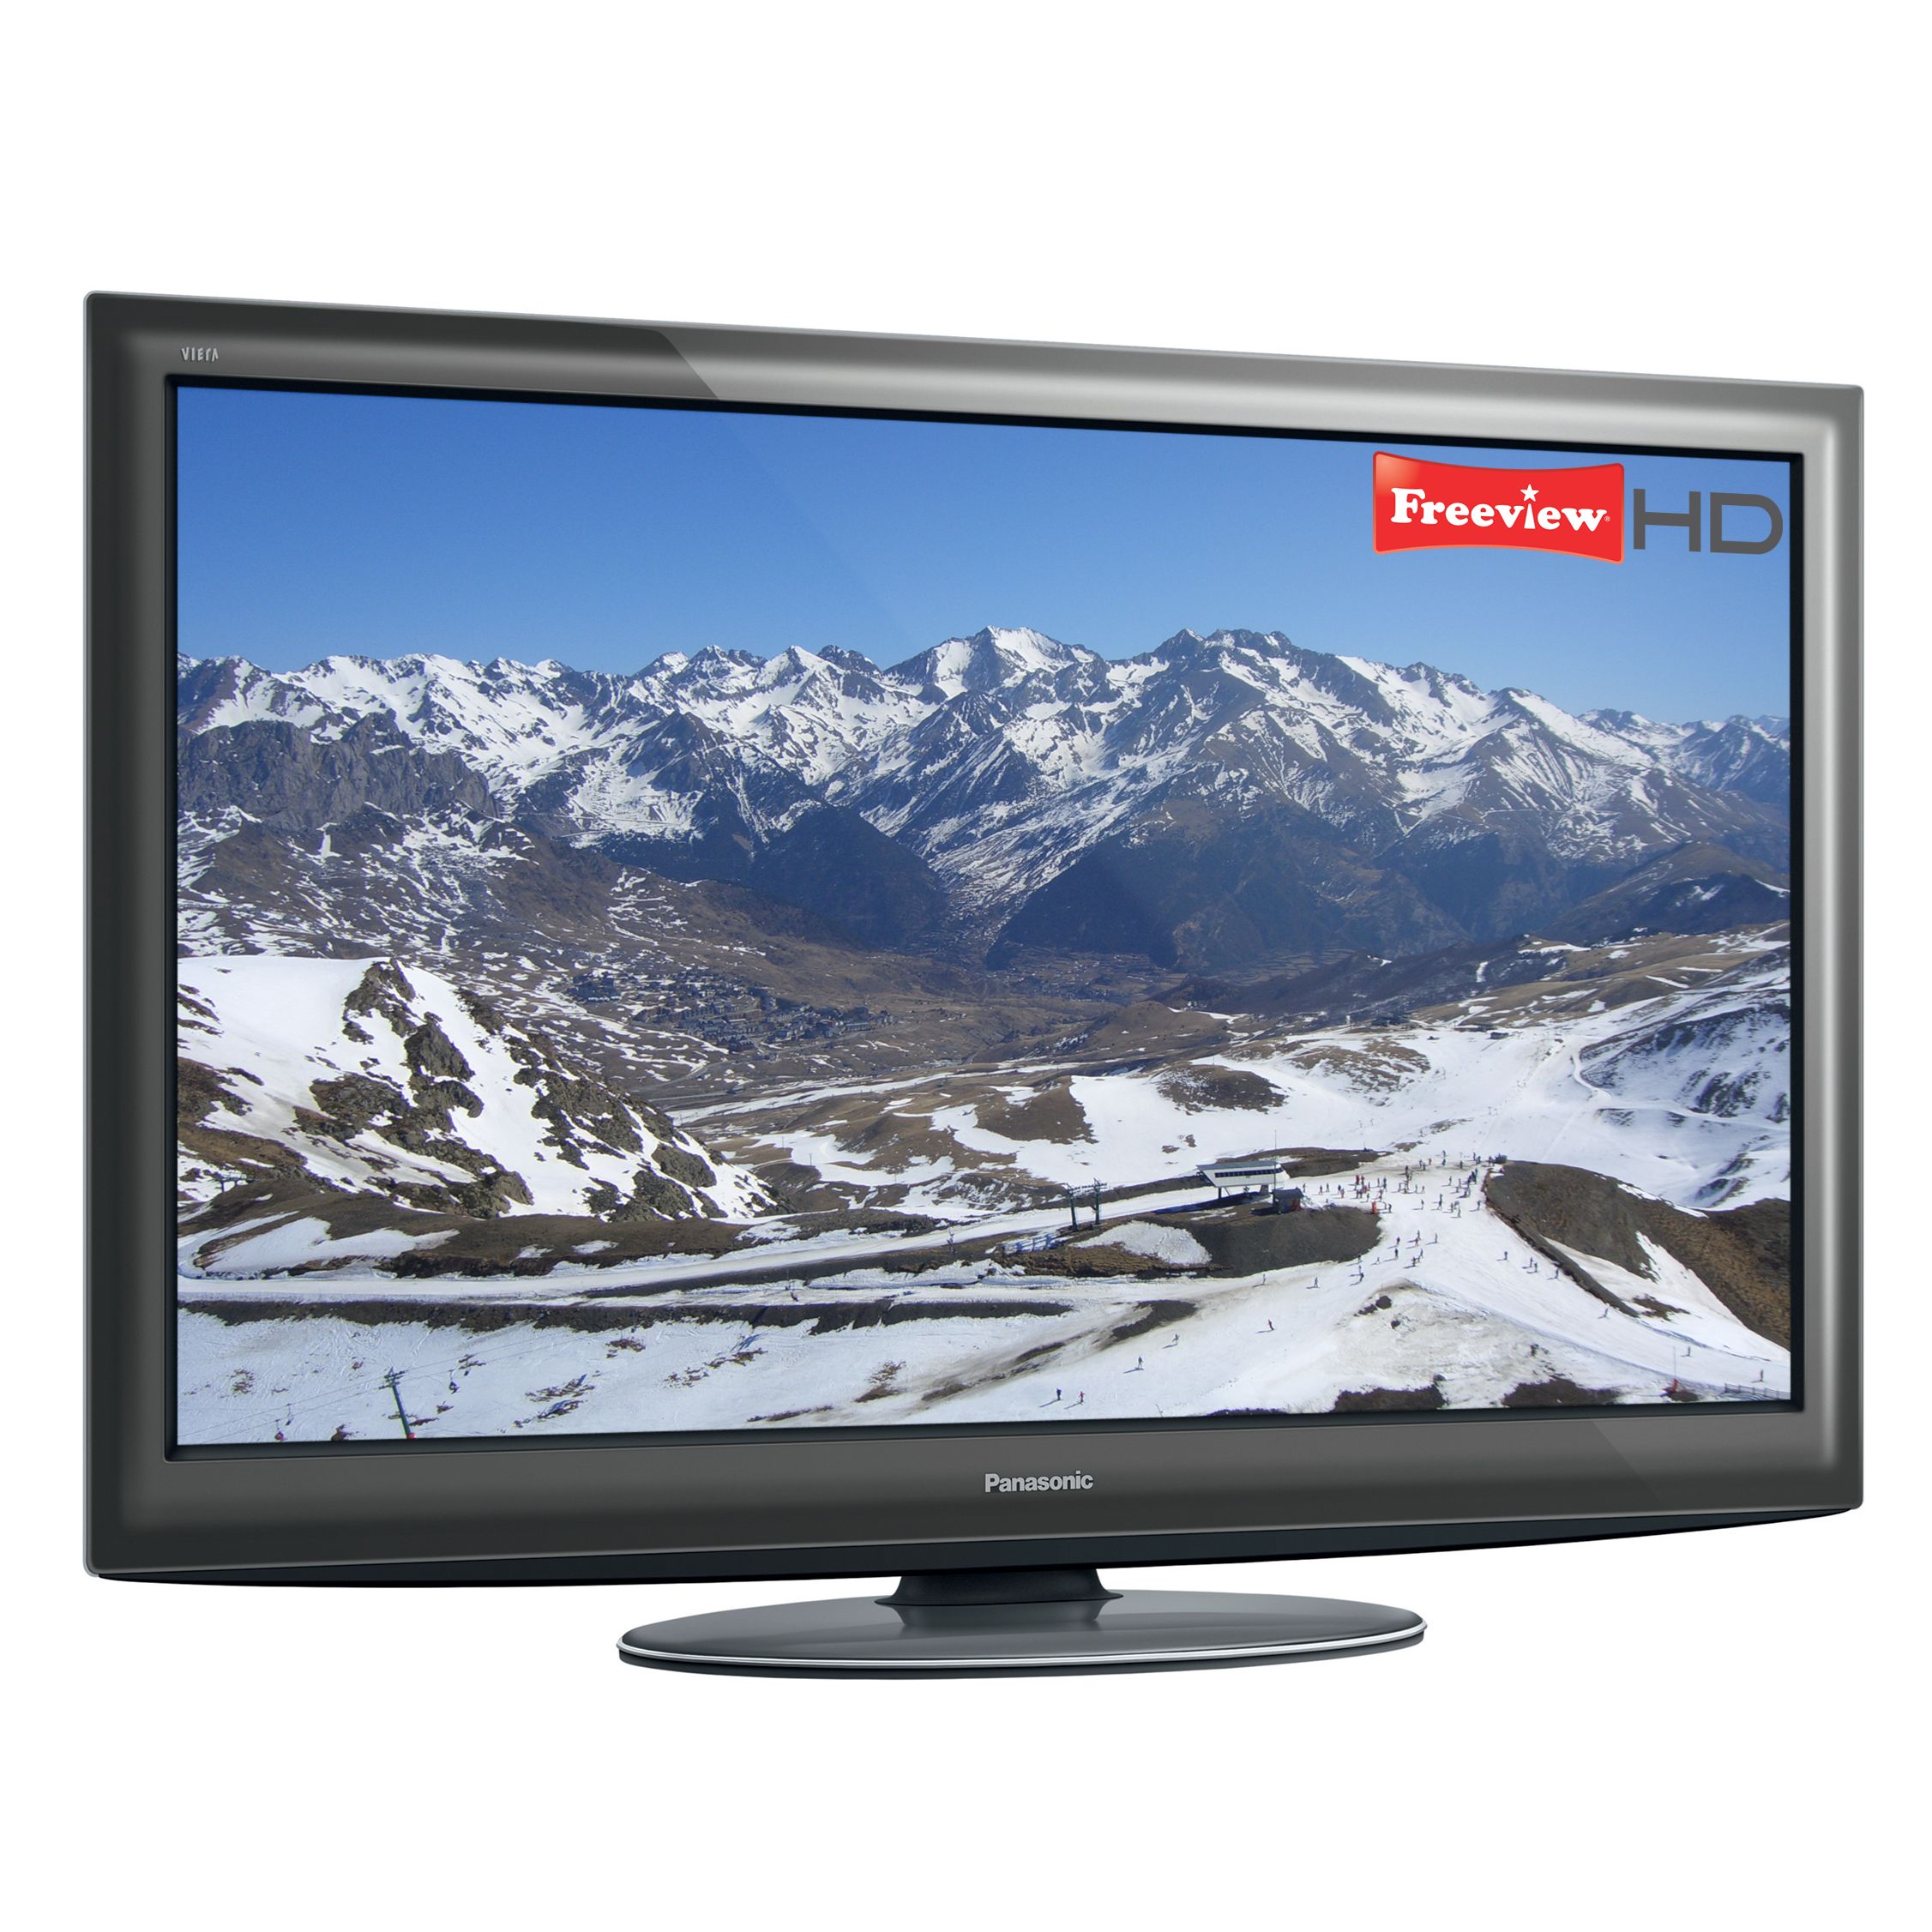 Panasonic Viera TX-L42D25B LCD/LED HD 1080p TV, 42" with Built-in freesat & Freeview HD at John Lewis